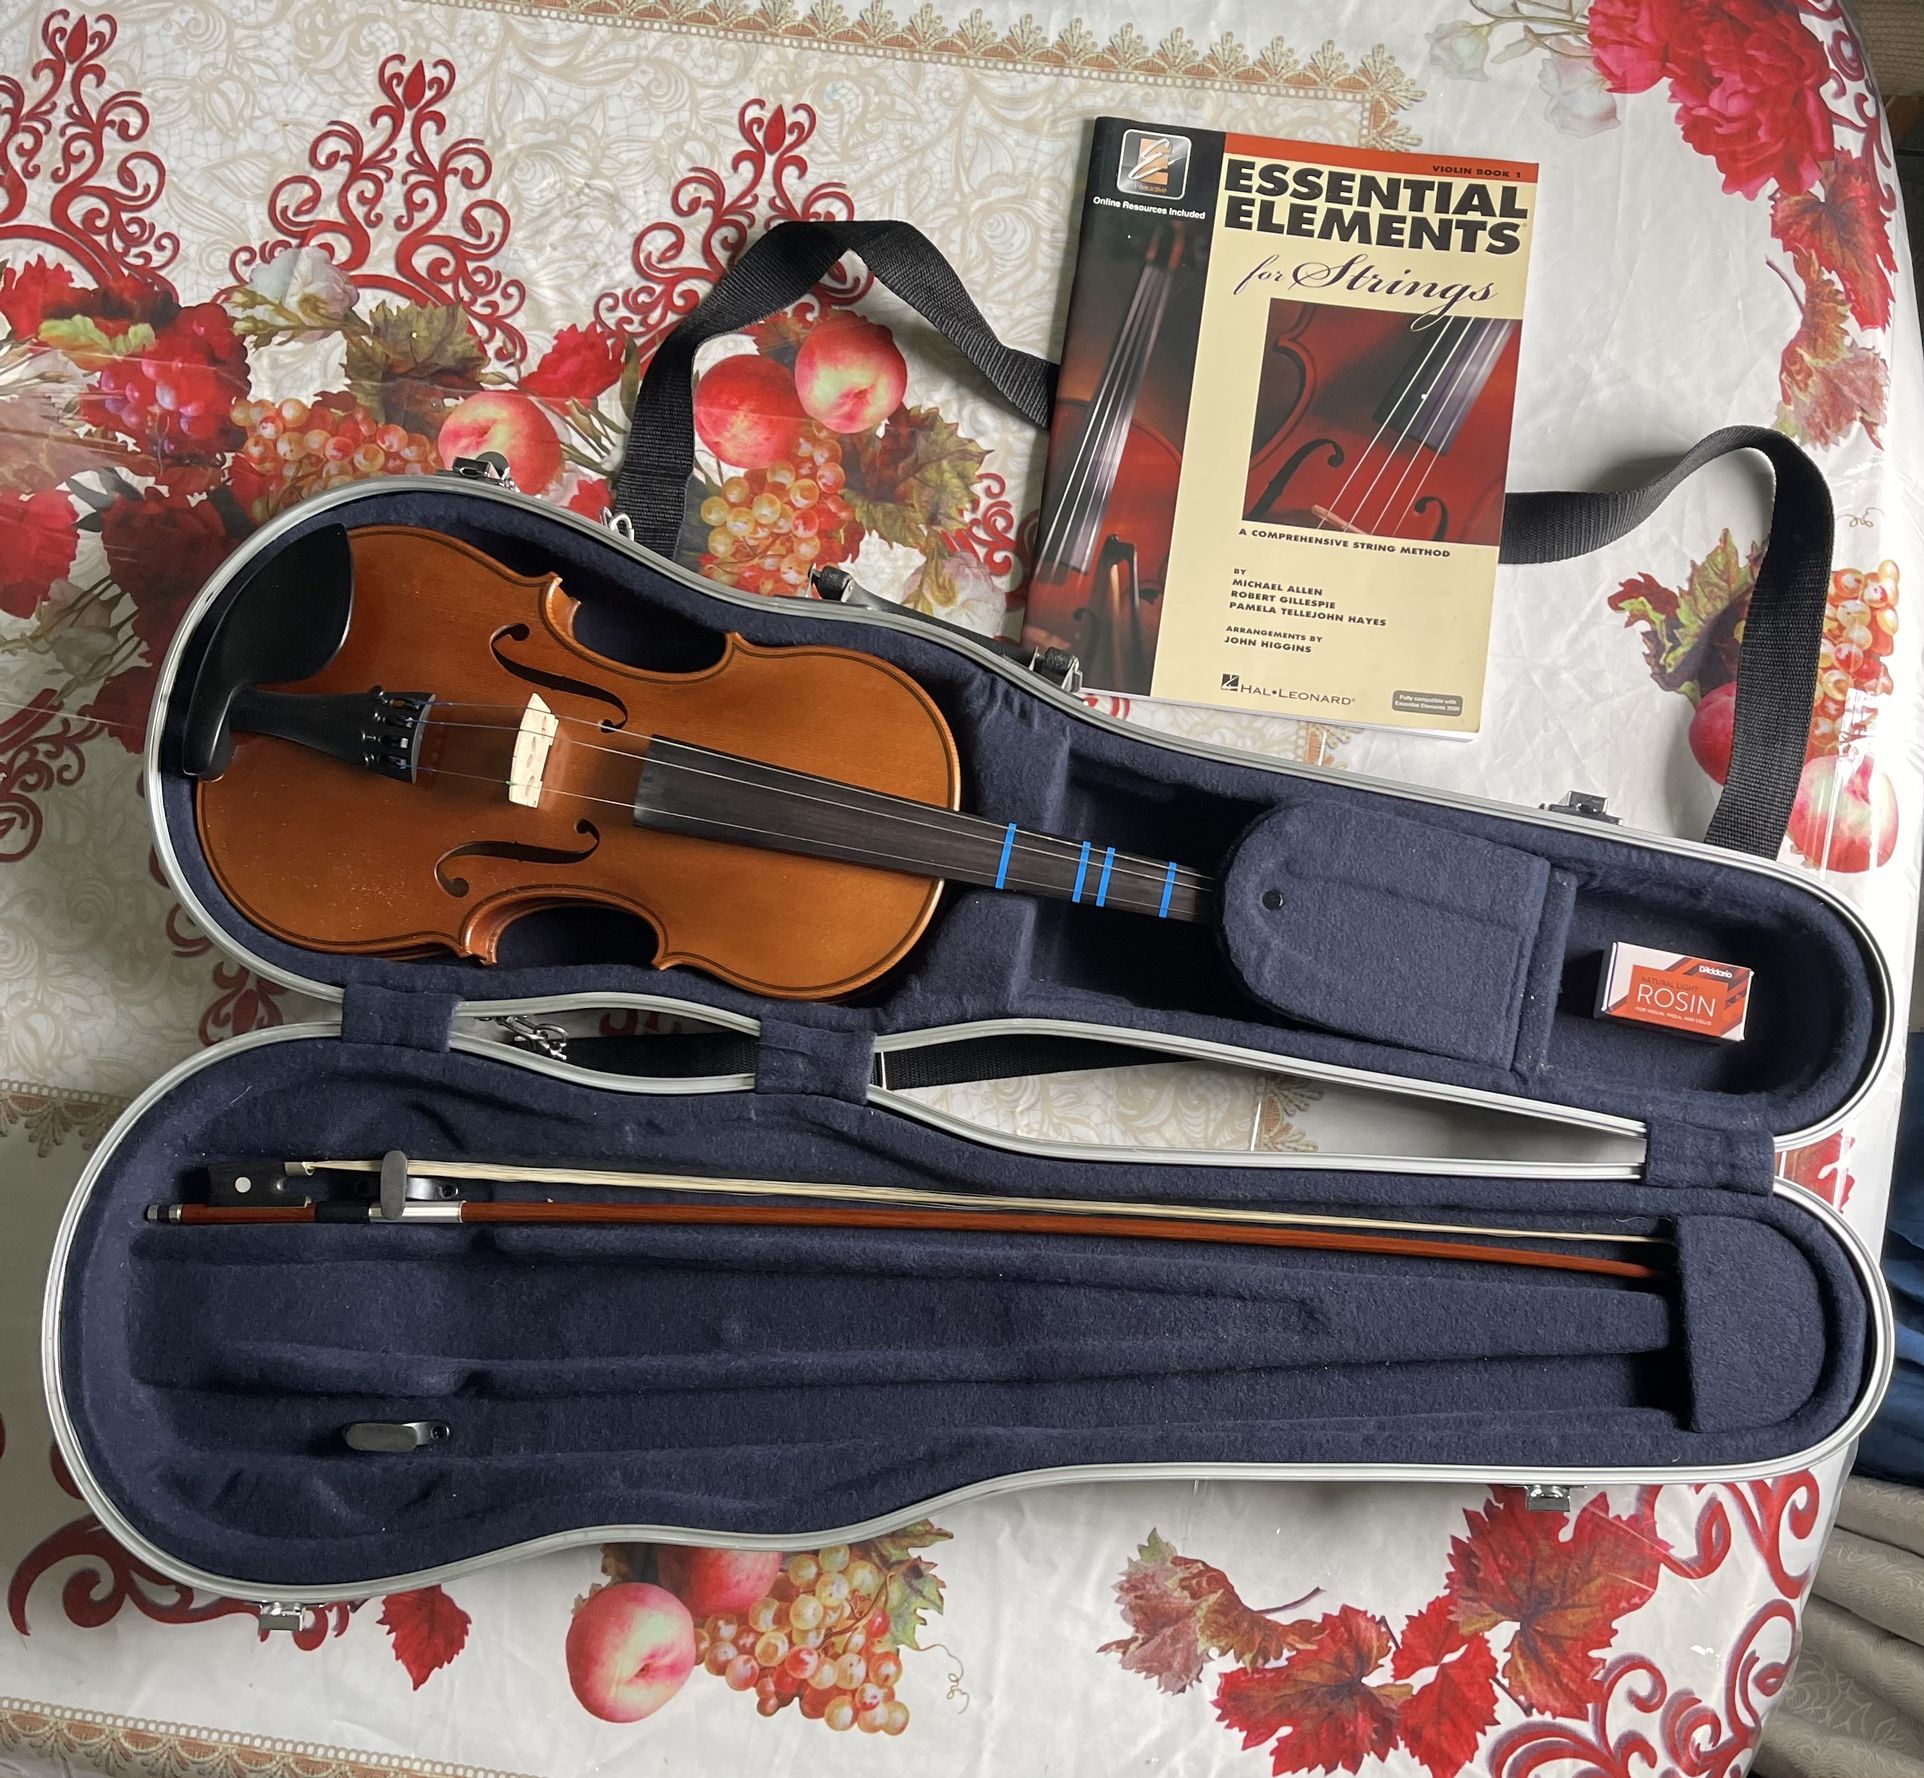 Yamaha (violin) 